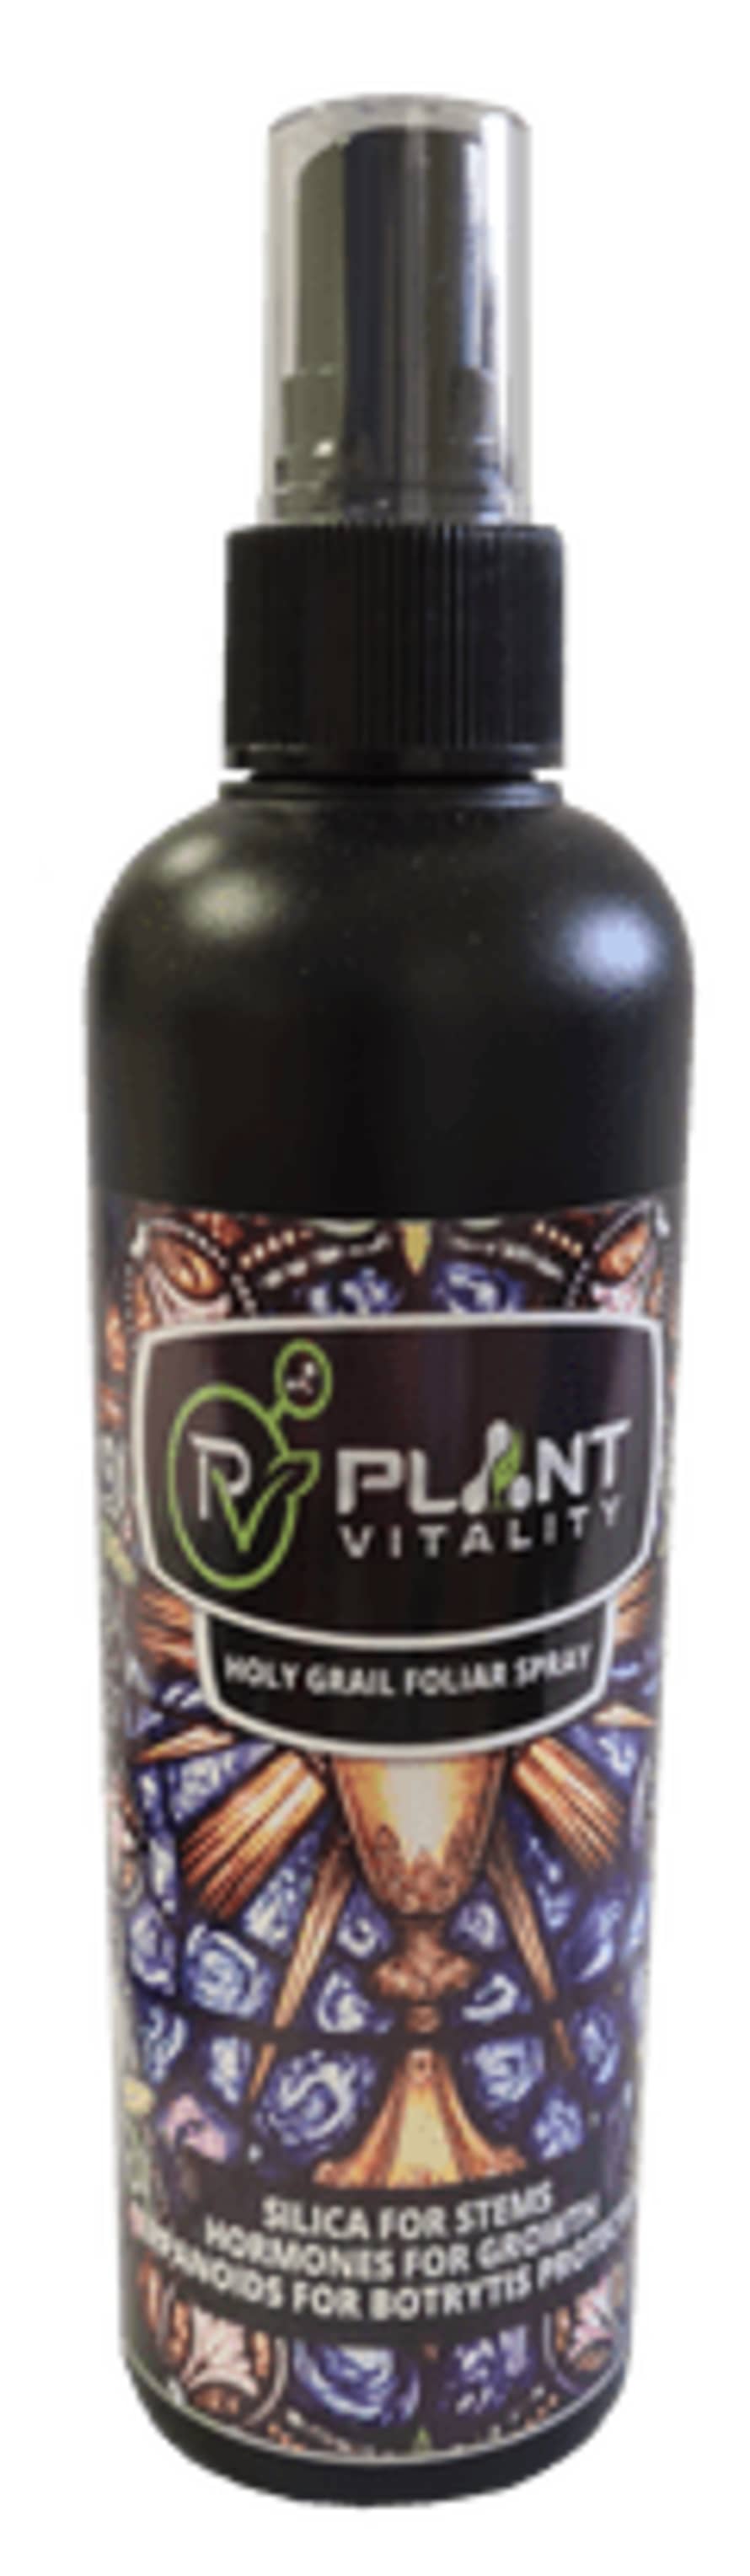 Sprouts of Bristol 10L Plant Vitality Holy Grail - Foliar Spray